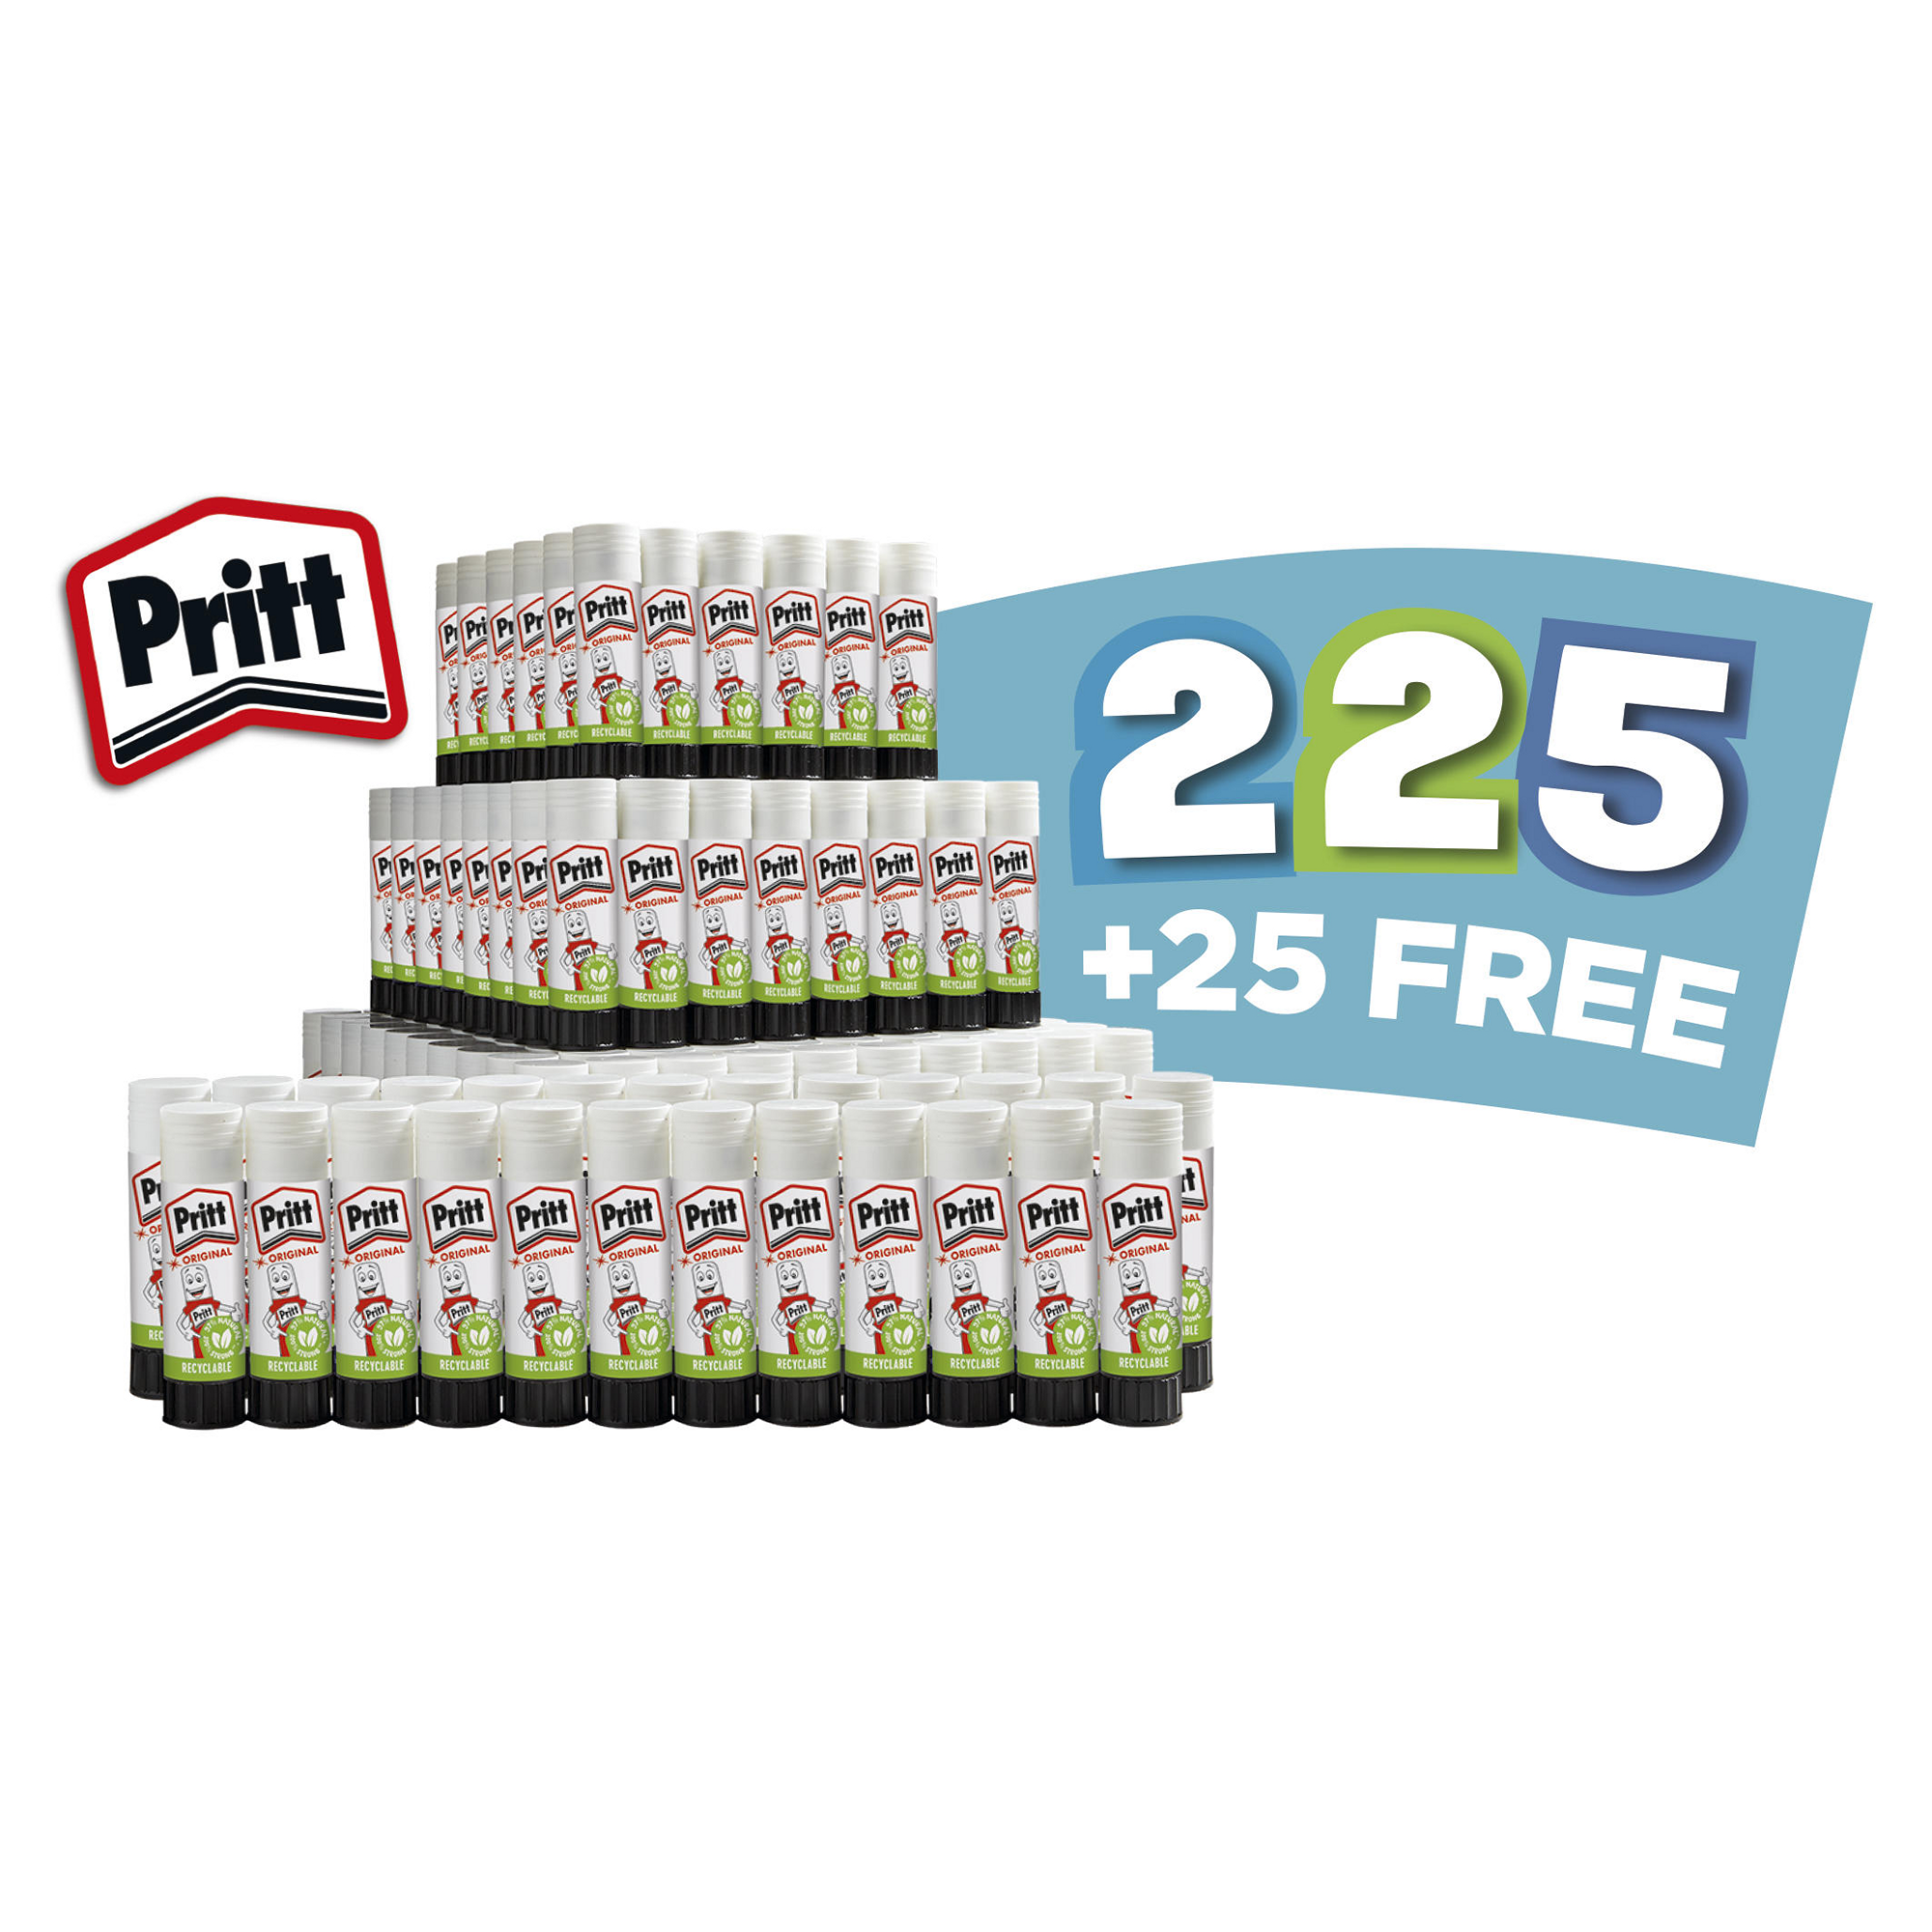 Pritt 43gx225 With 25 Free Sticks